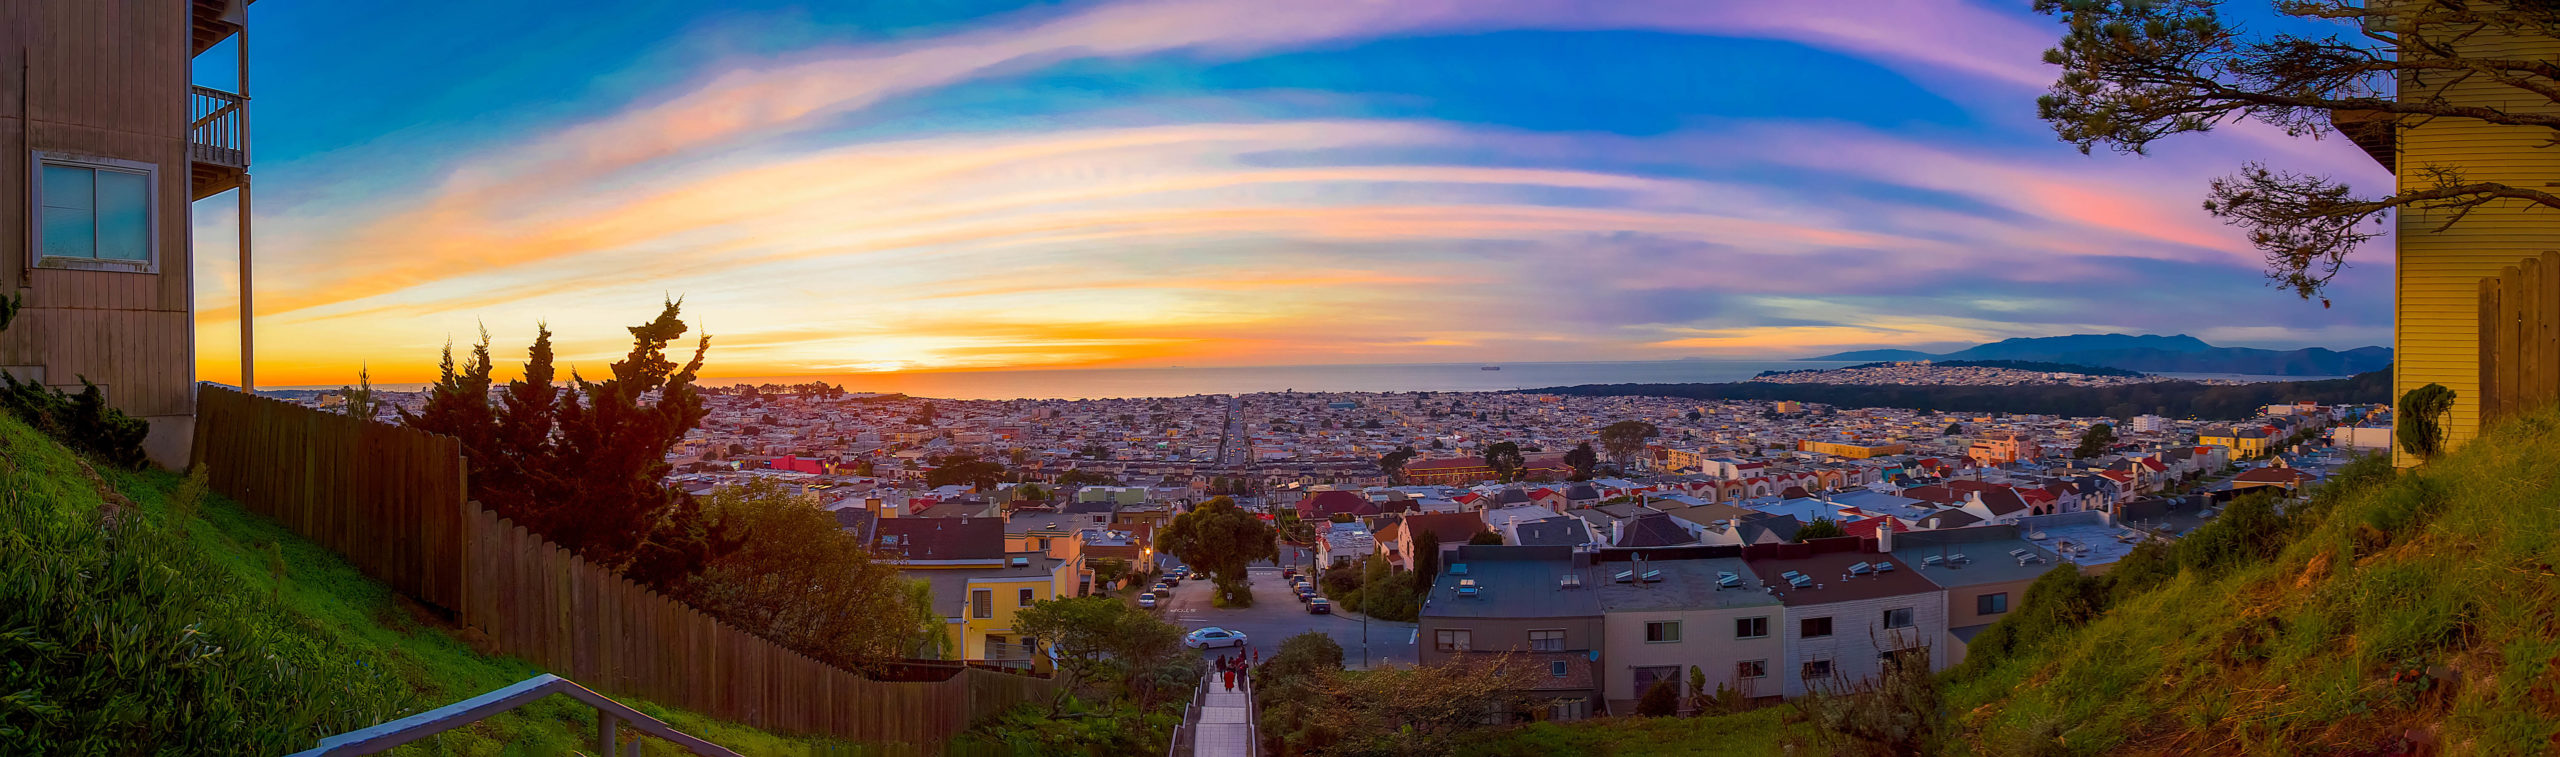 Sunset in San Francisco Panorama